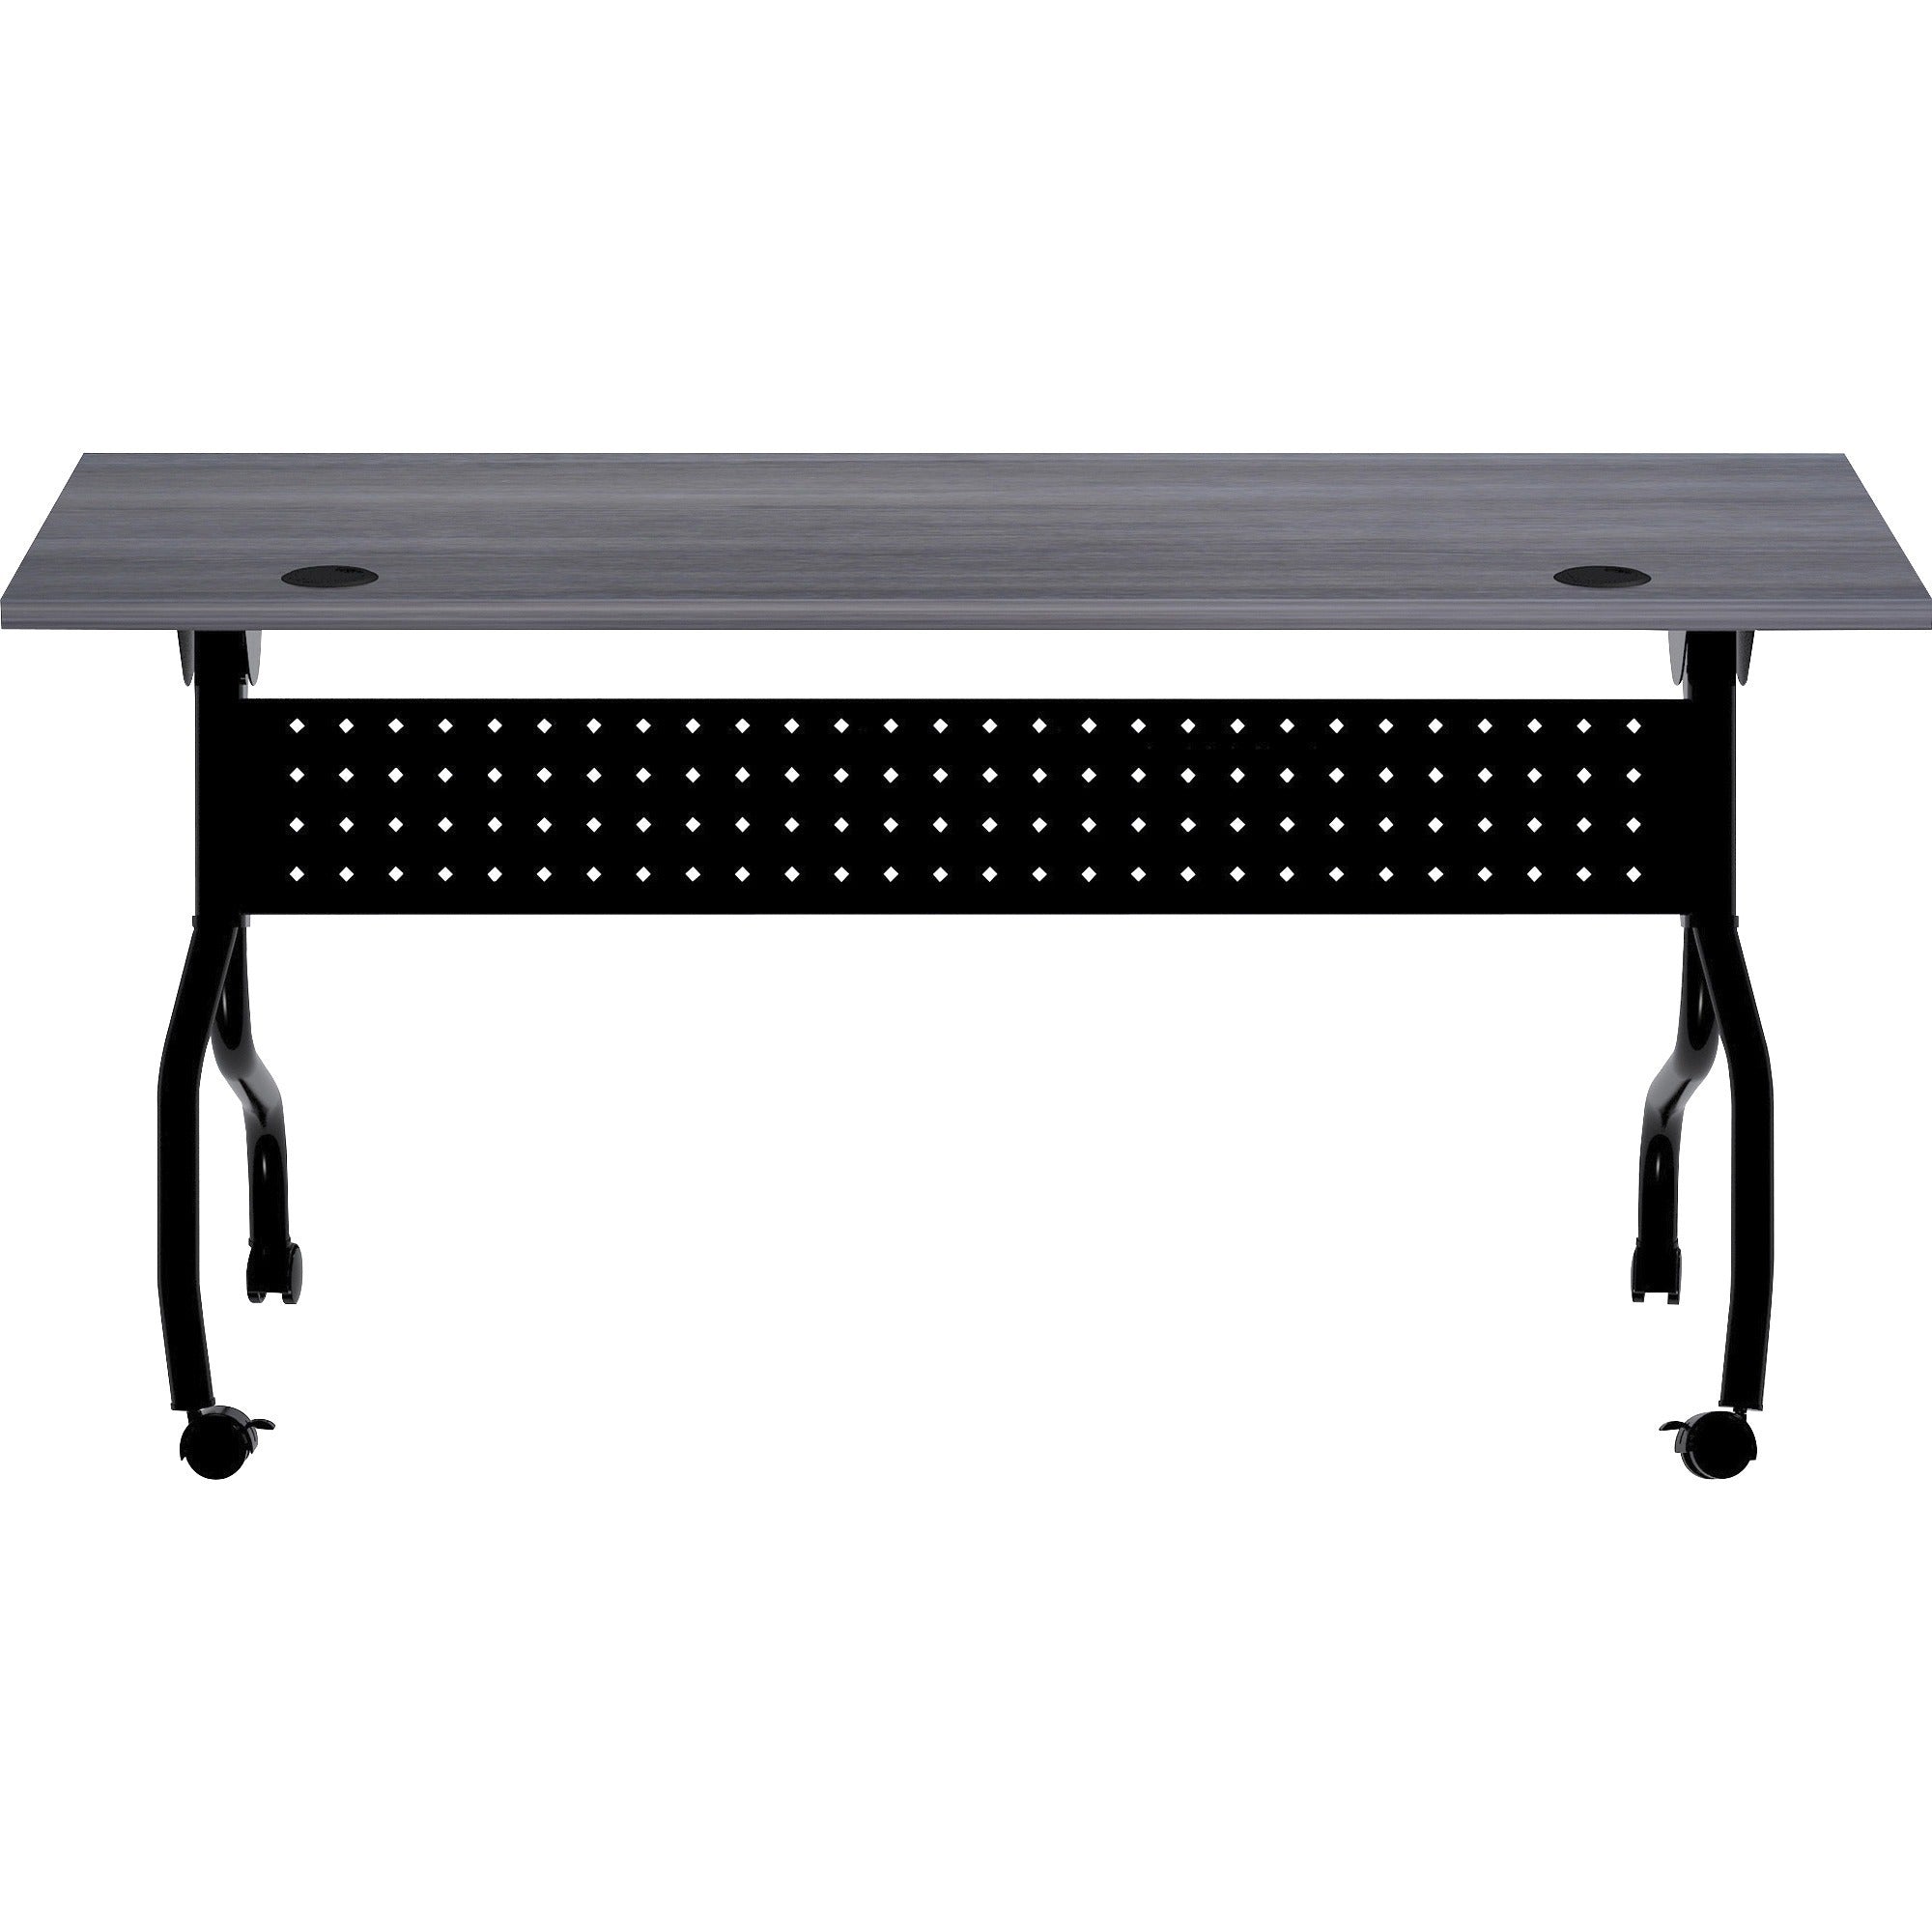 lorell-flip-top-training-table-for-table-topcharcoal-rectangle-melamine-top-black-four-leg-base-4-legs-x-60-table-top-width-x-2360-table-top-depth-2950-height-melamine-1-each_llr59487 - 5